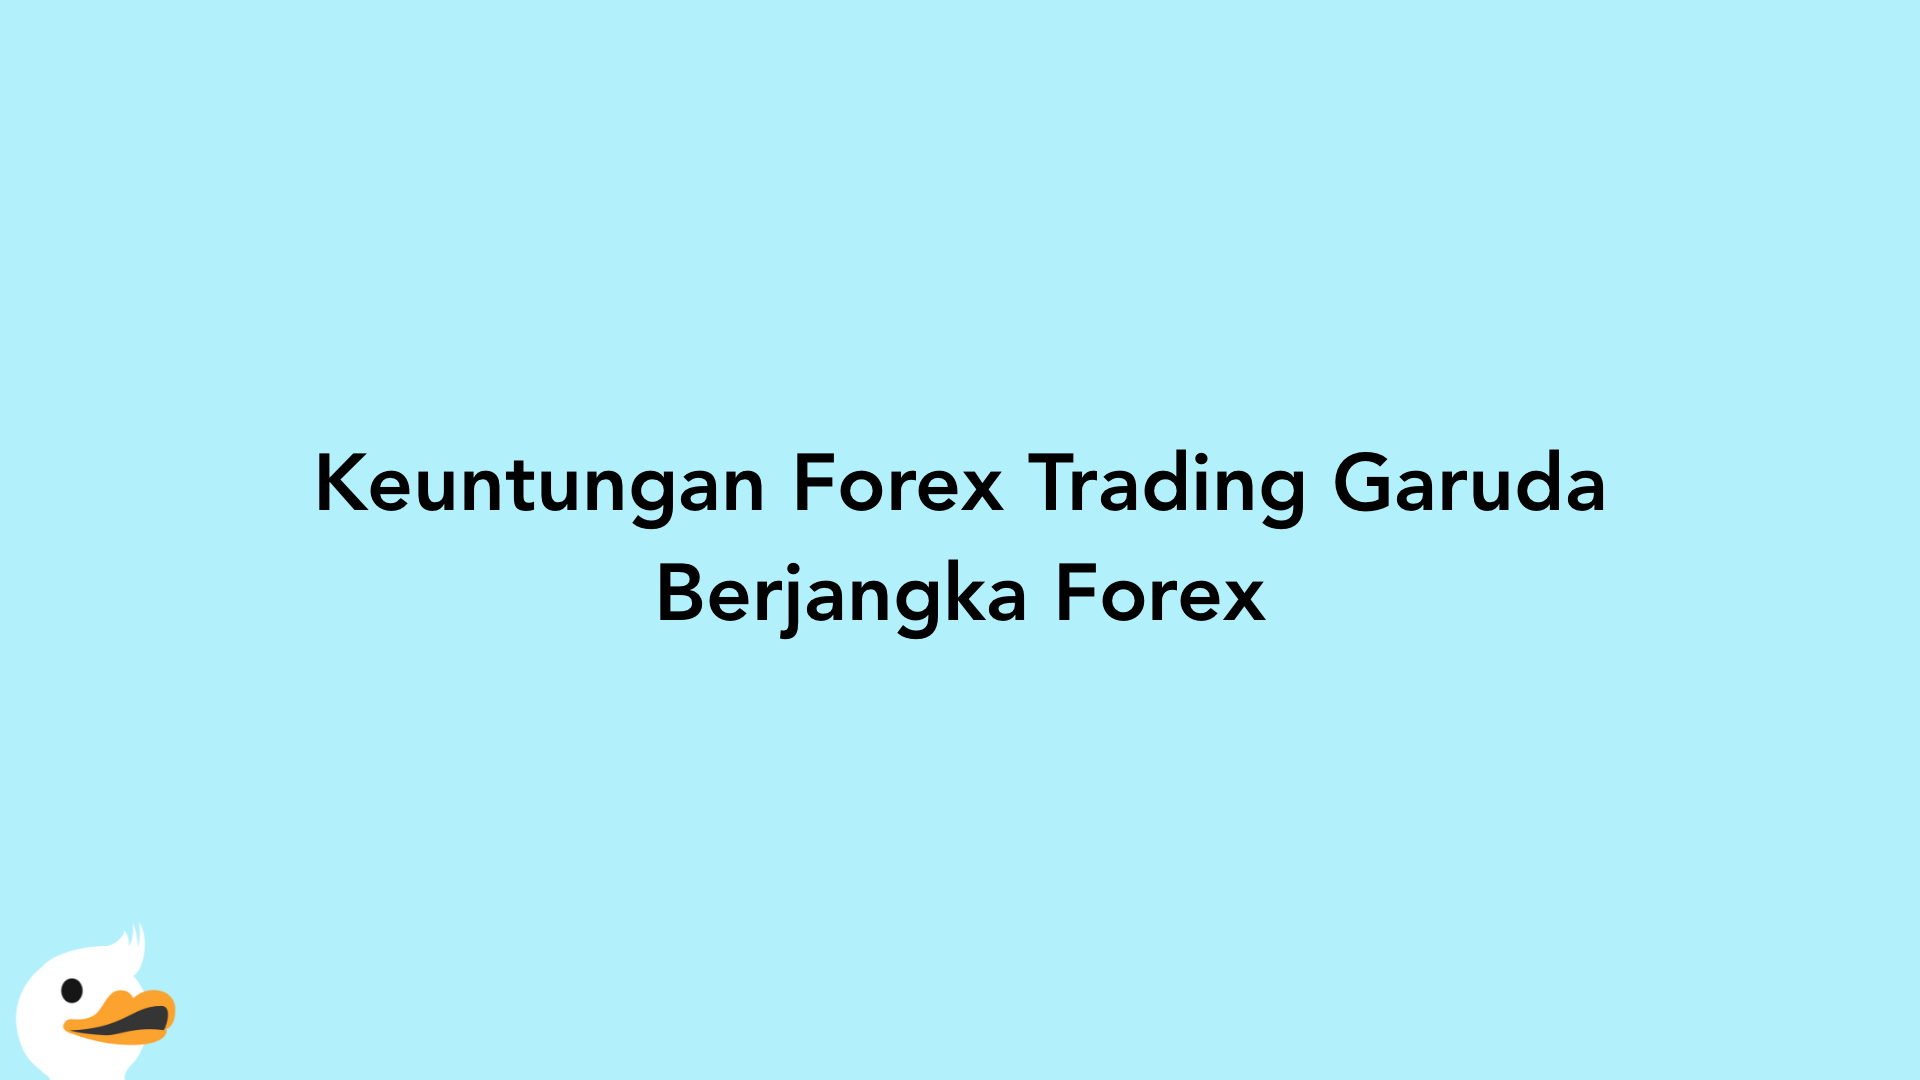 Keuntungan Forex Trading Garuda Berjangka Forex